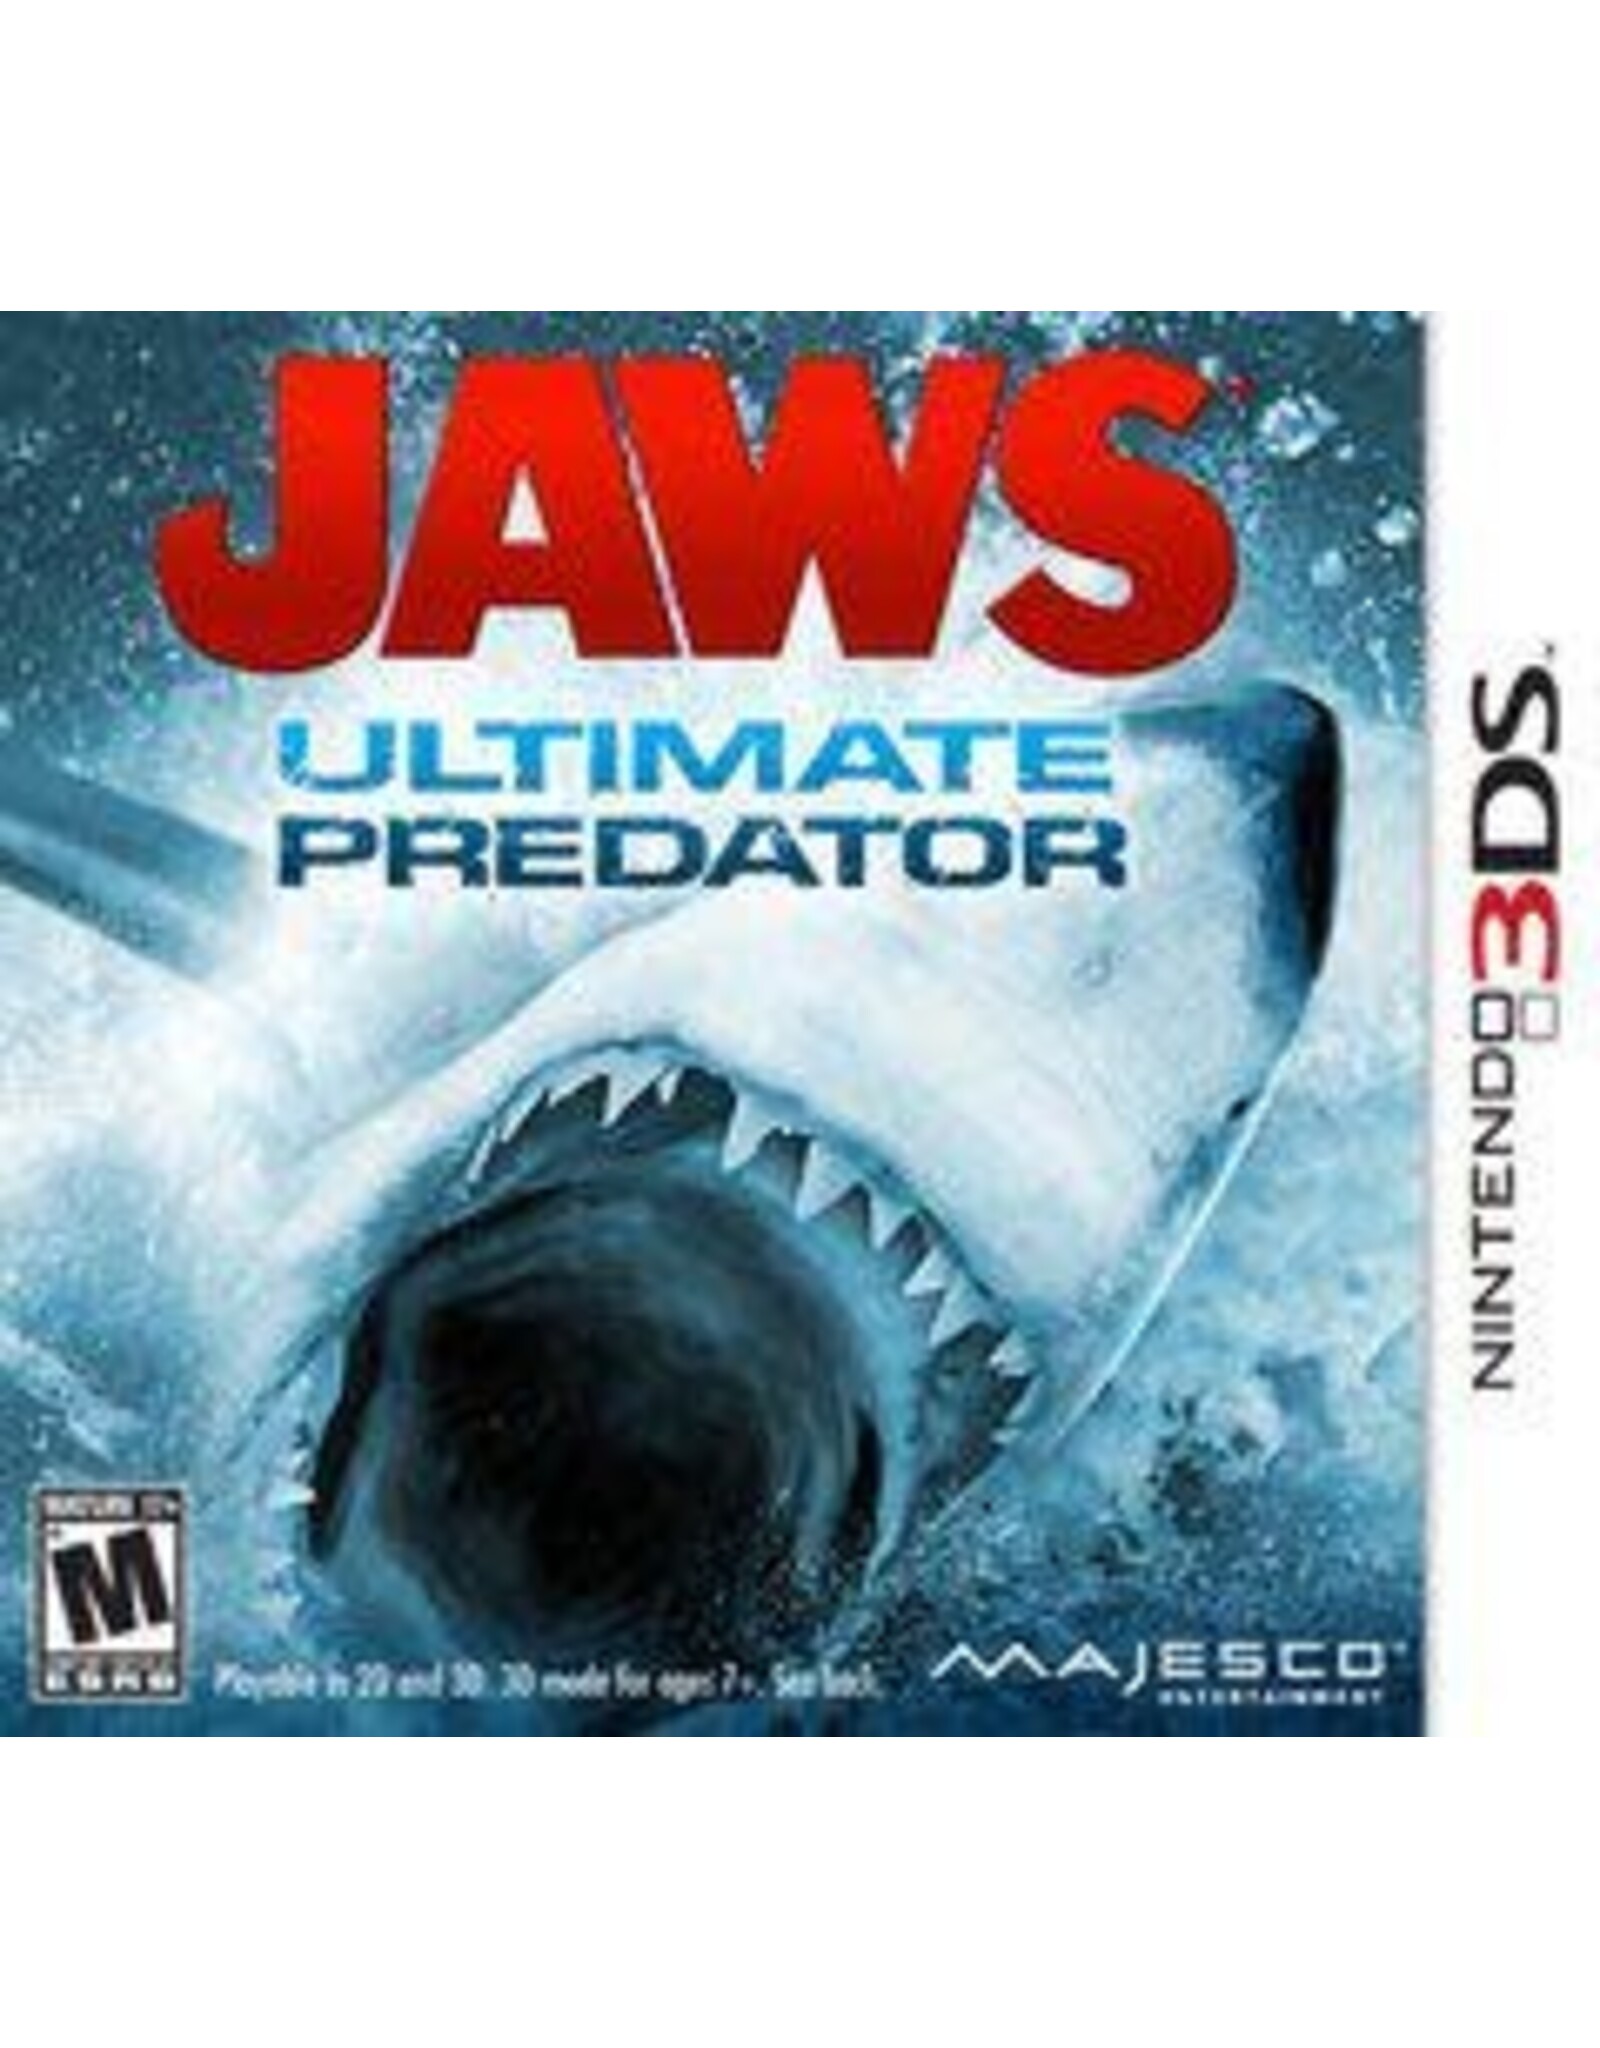 Nintendo 3DS Jaws: Ultimate Predator (CiB)